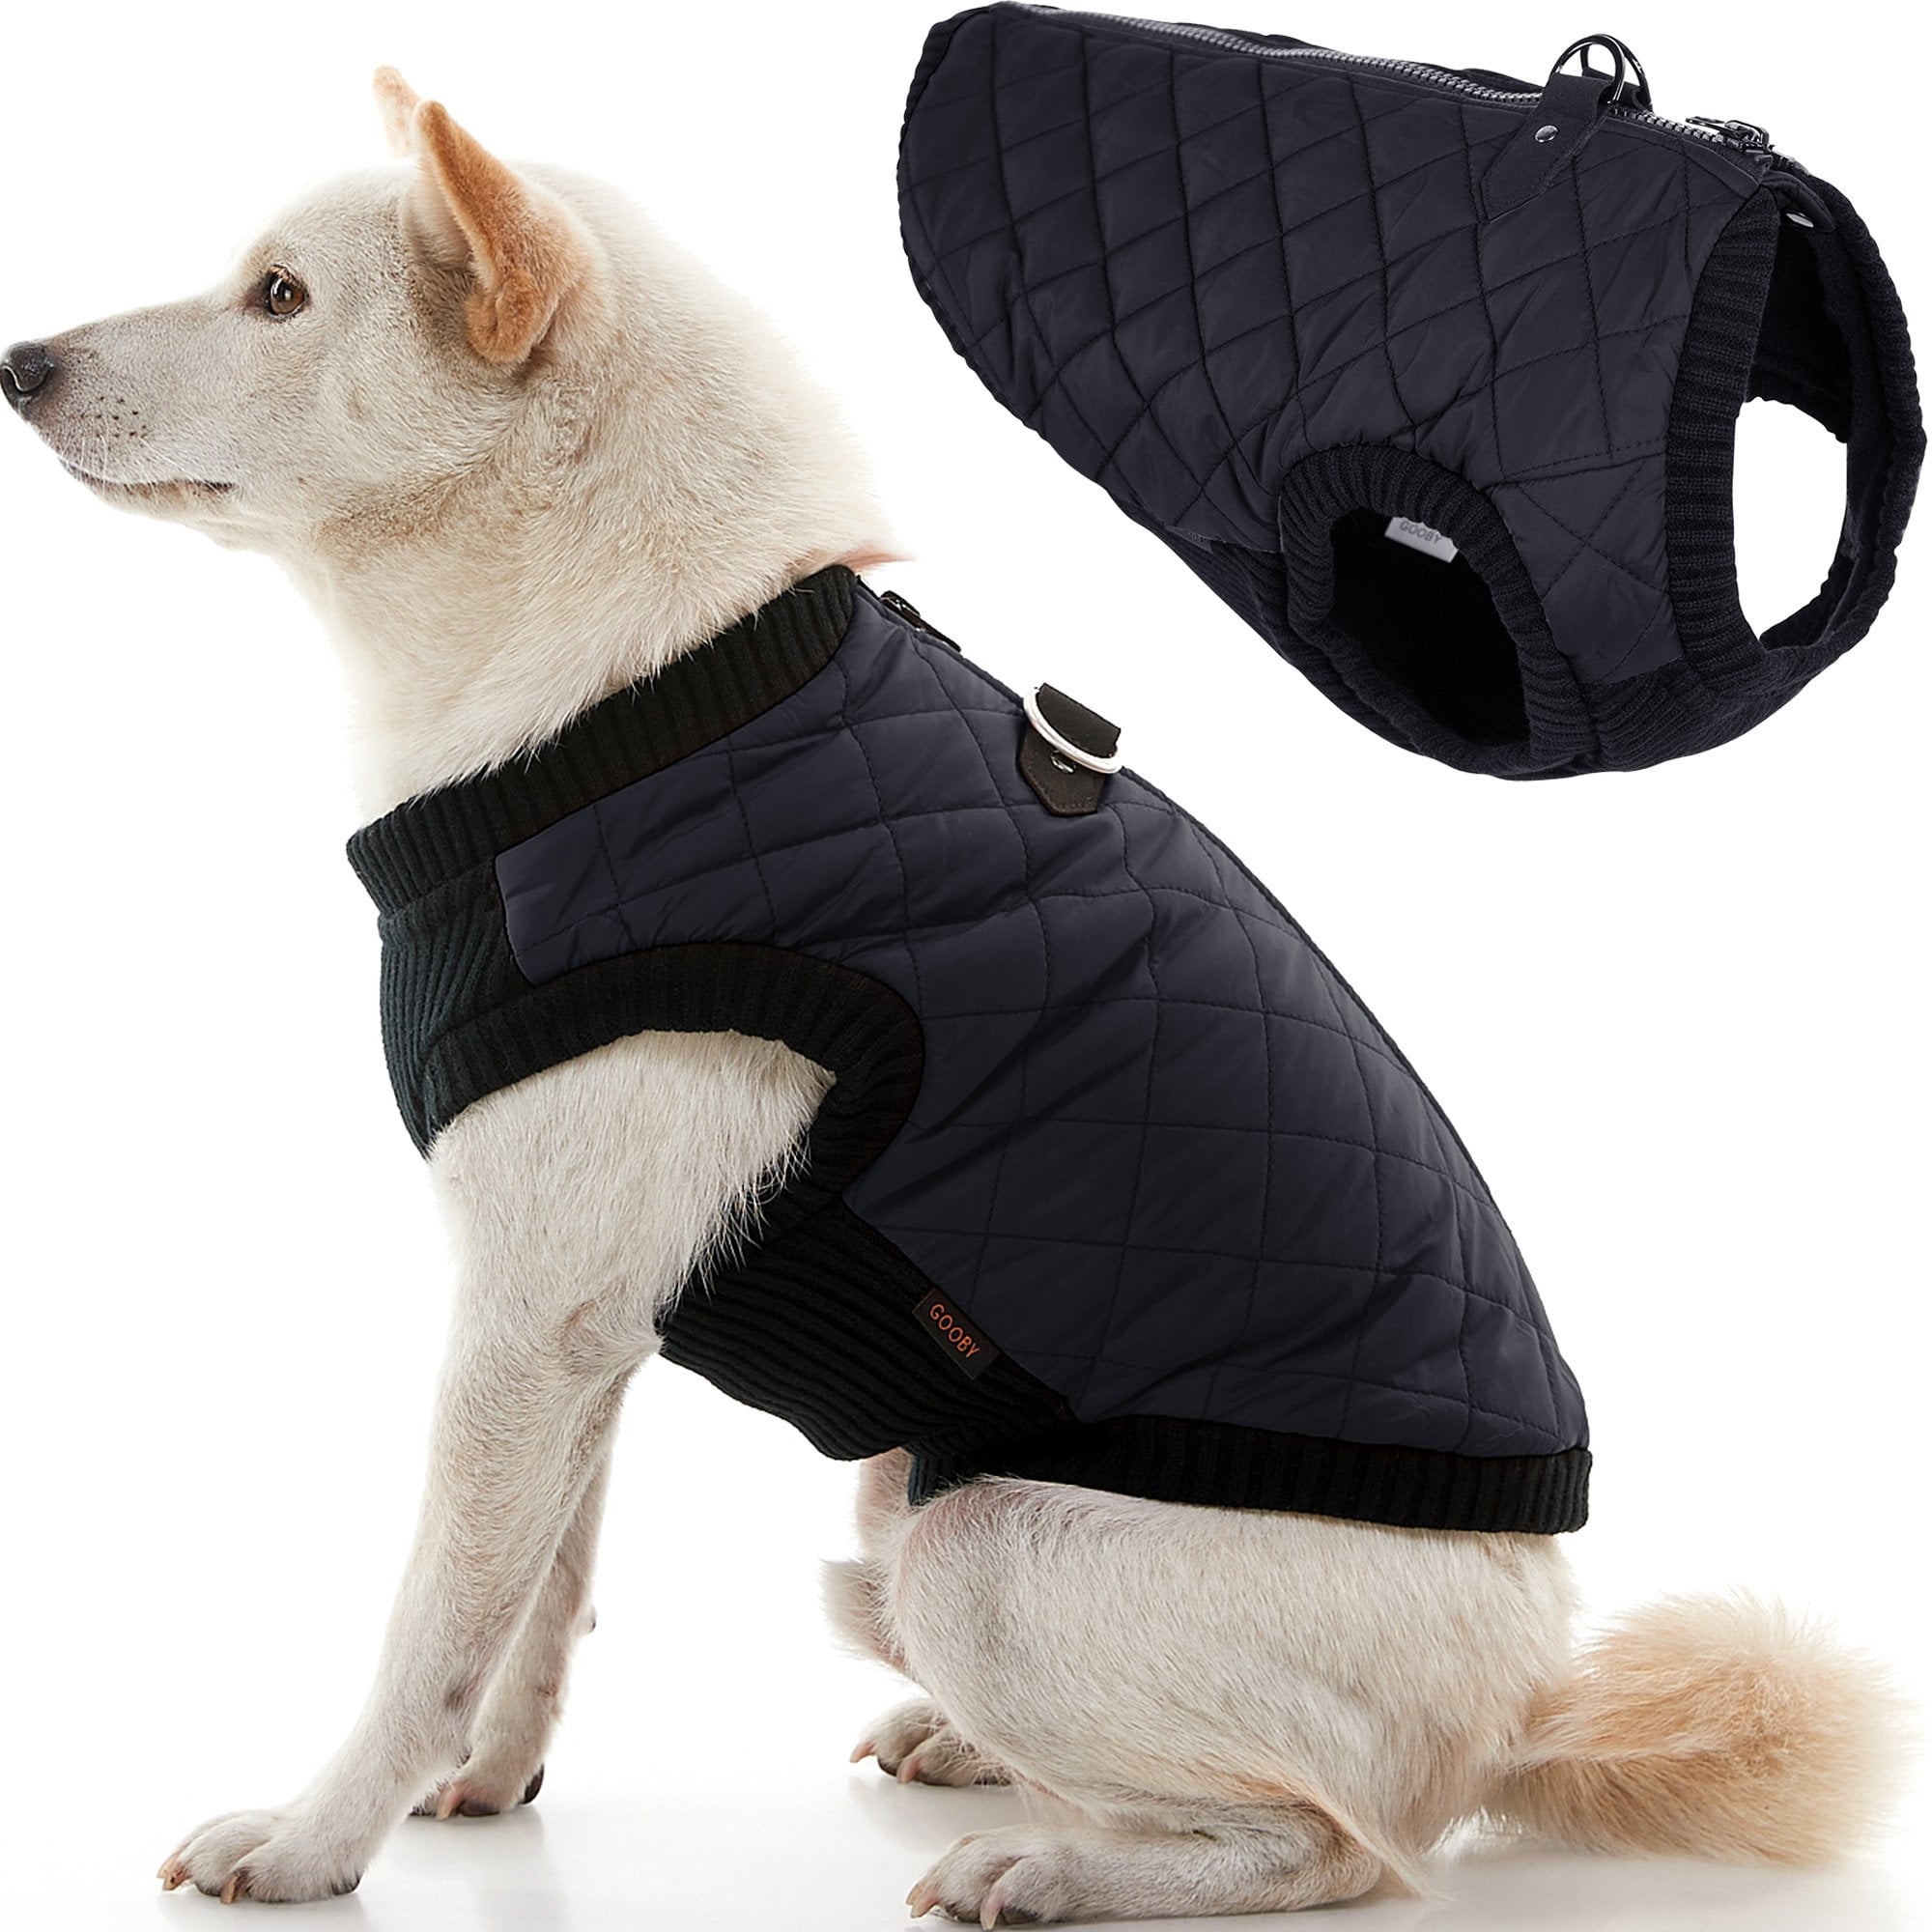 Polar fleece inside Perfect fit XS XL Waterproof Reflective Coat for Dogs 